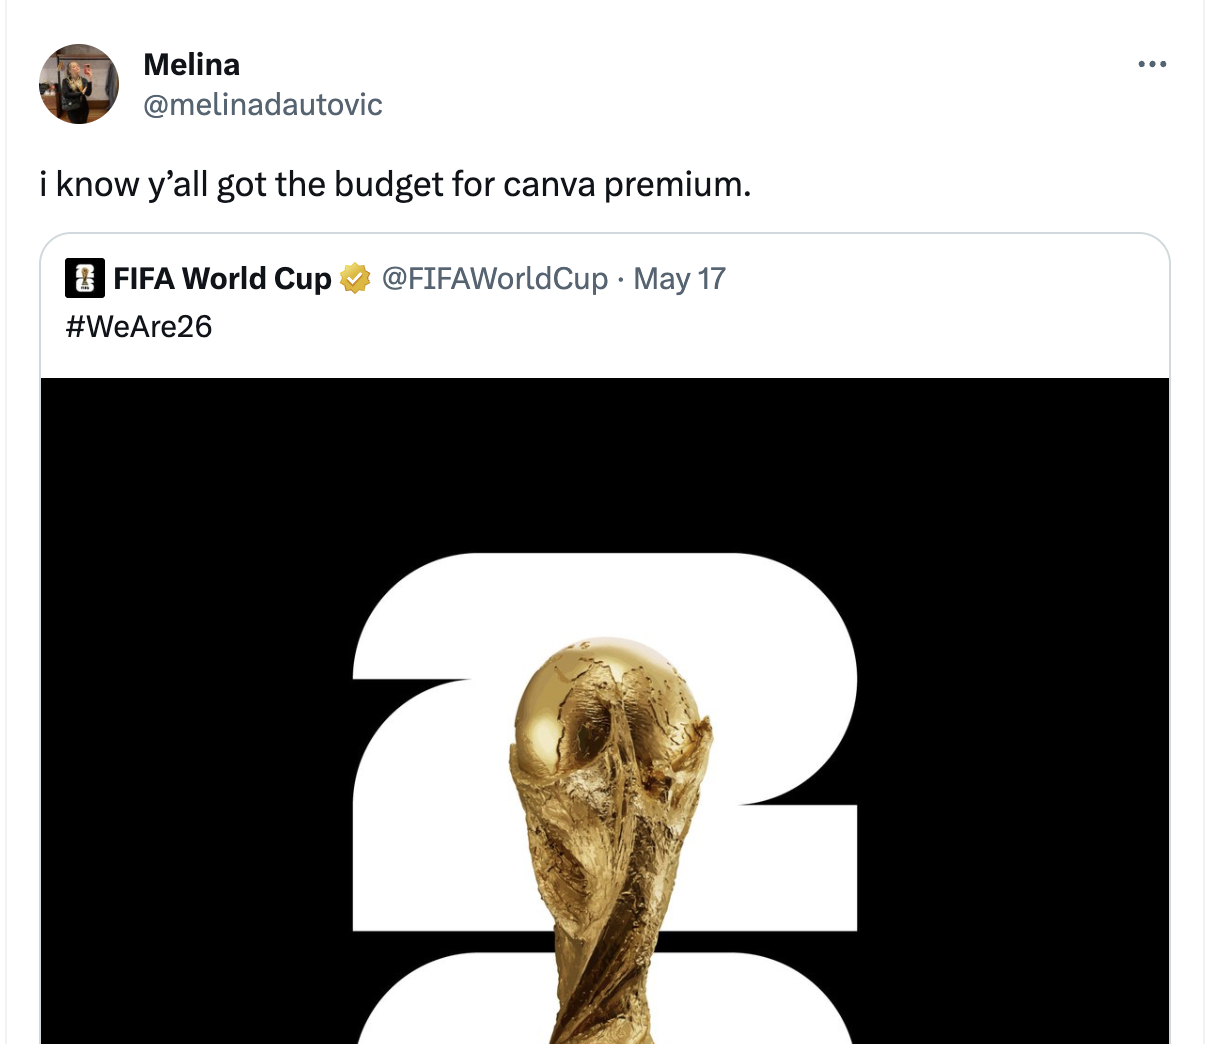 Tweet mocking FIFA 2026 logo design says "I know y'all got the budget for Canva Premium"